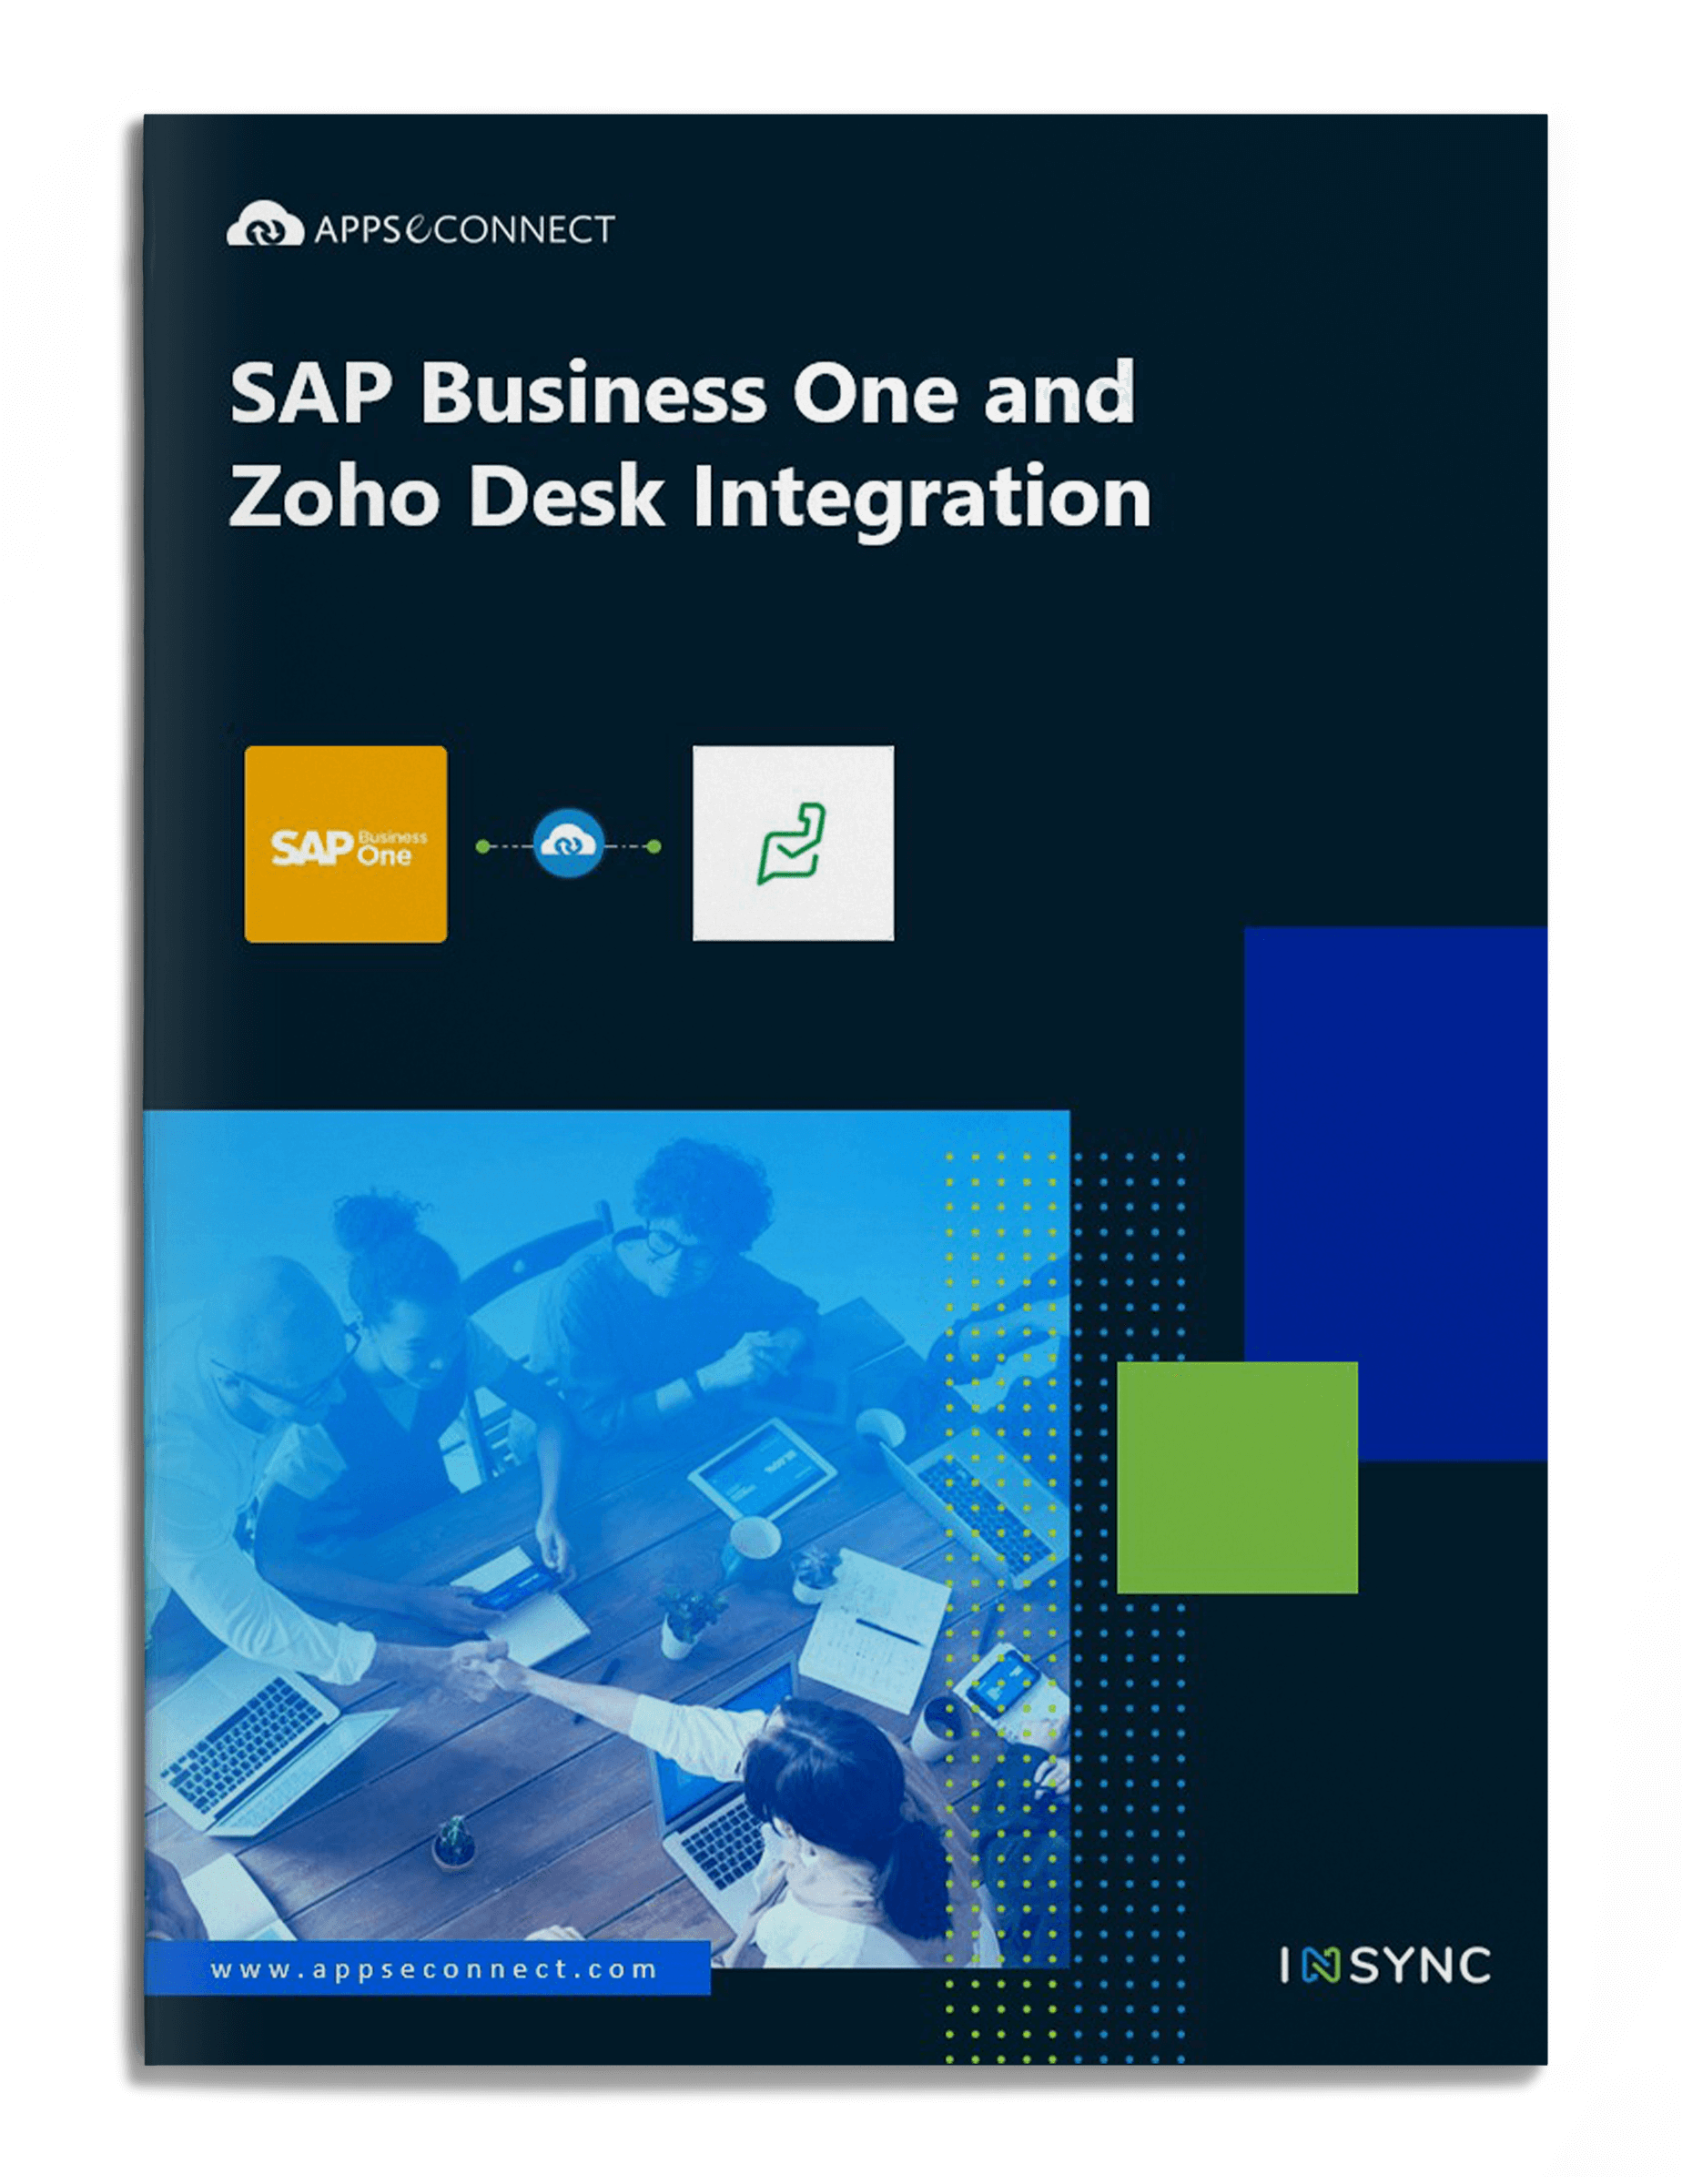 sap-business-one-zohodesk-integration-brochure-cover